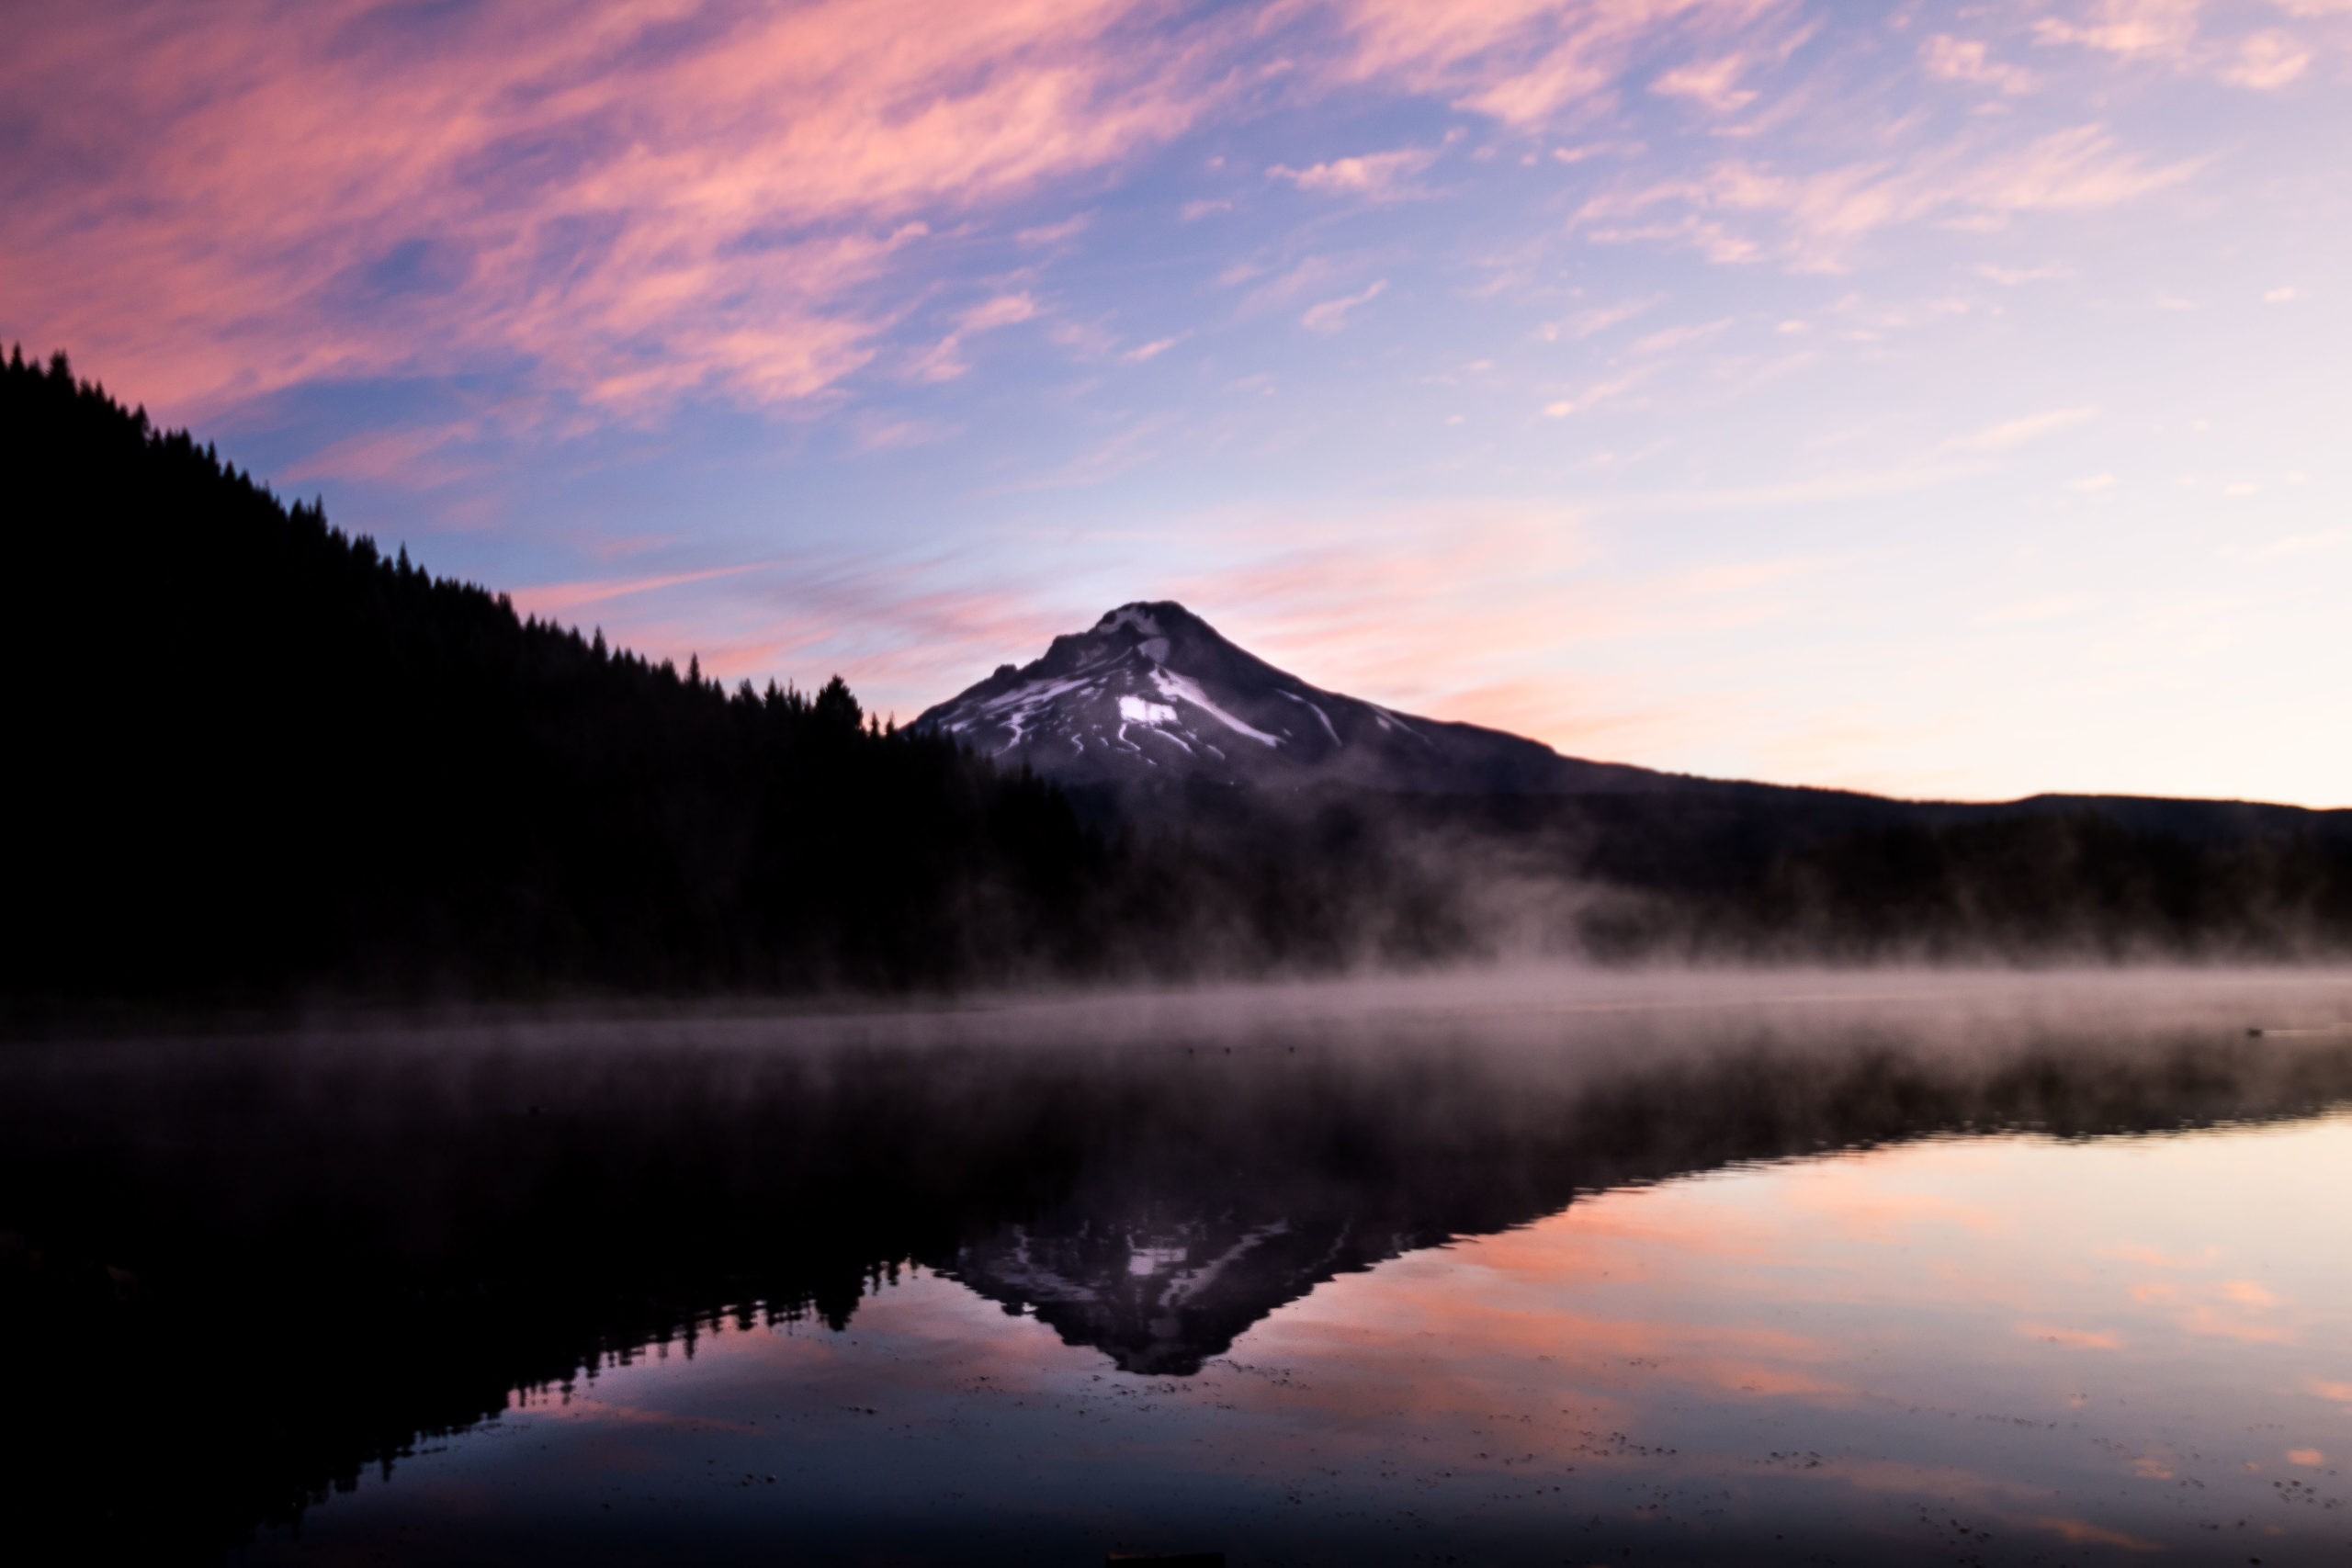 Mountain and lake at sunset.